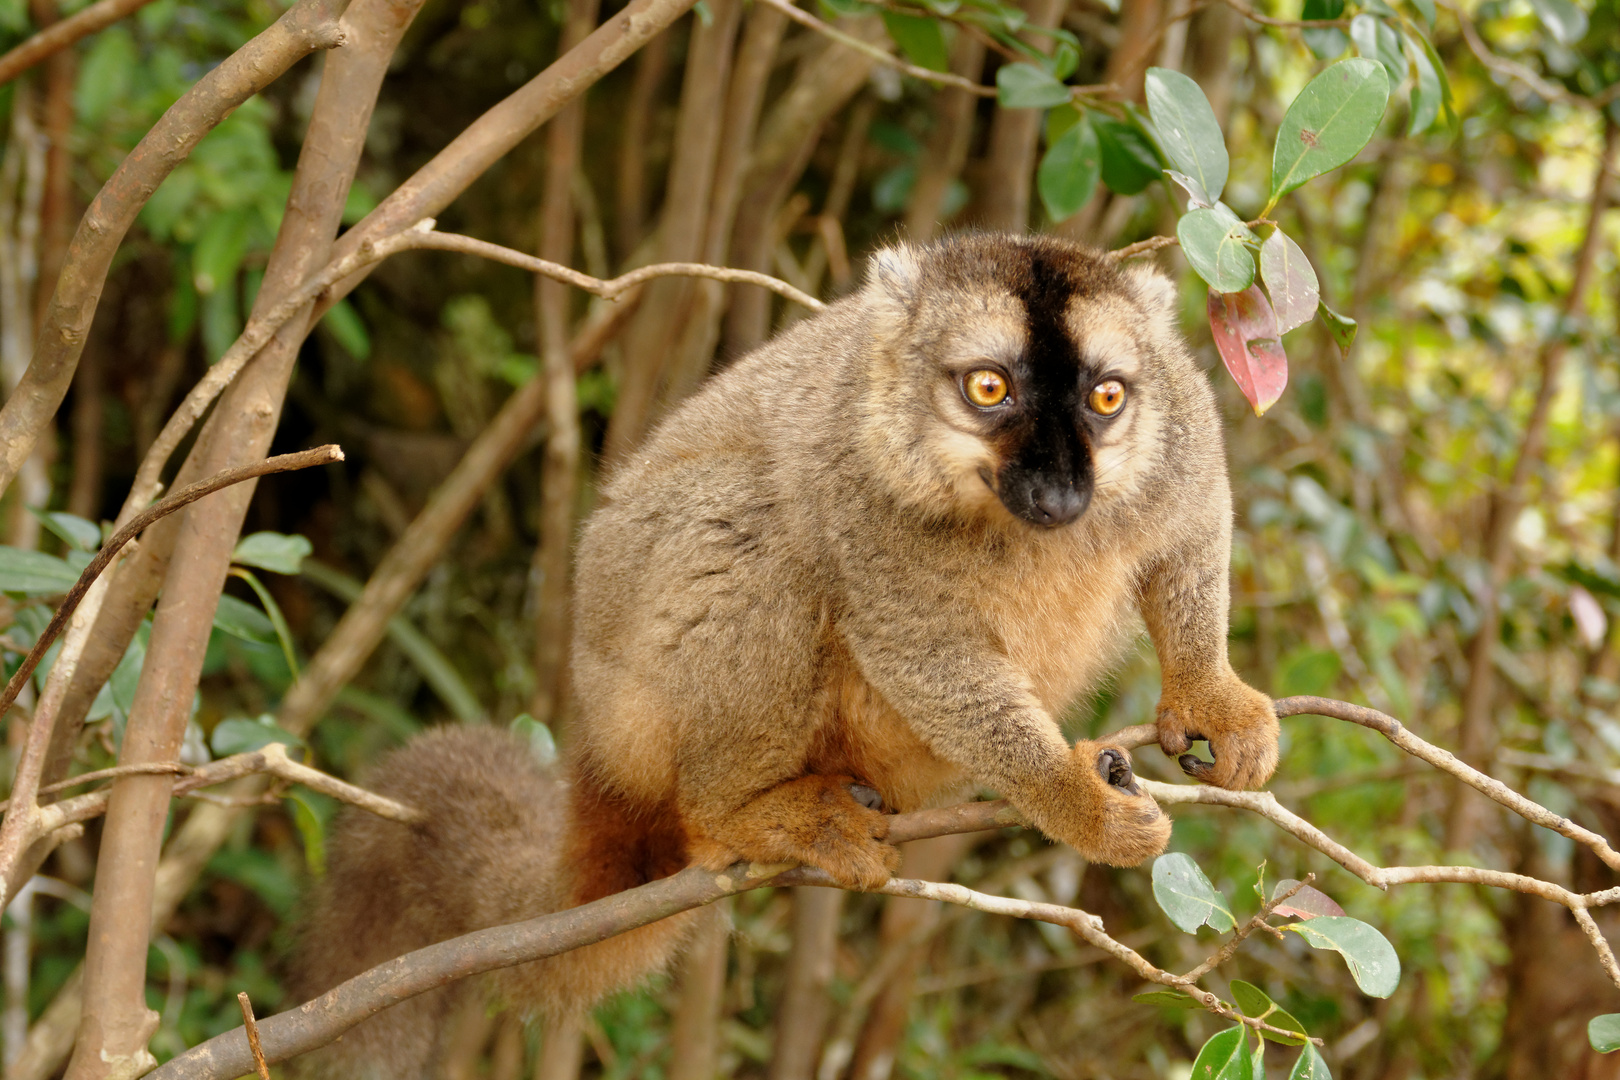 Brauner Lemur_1